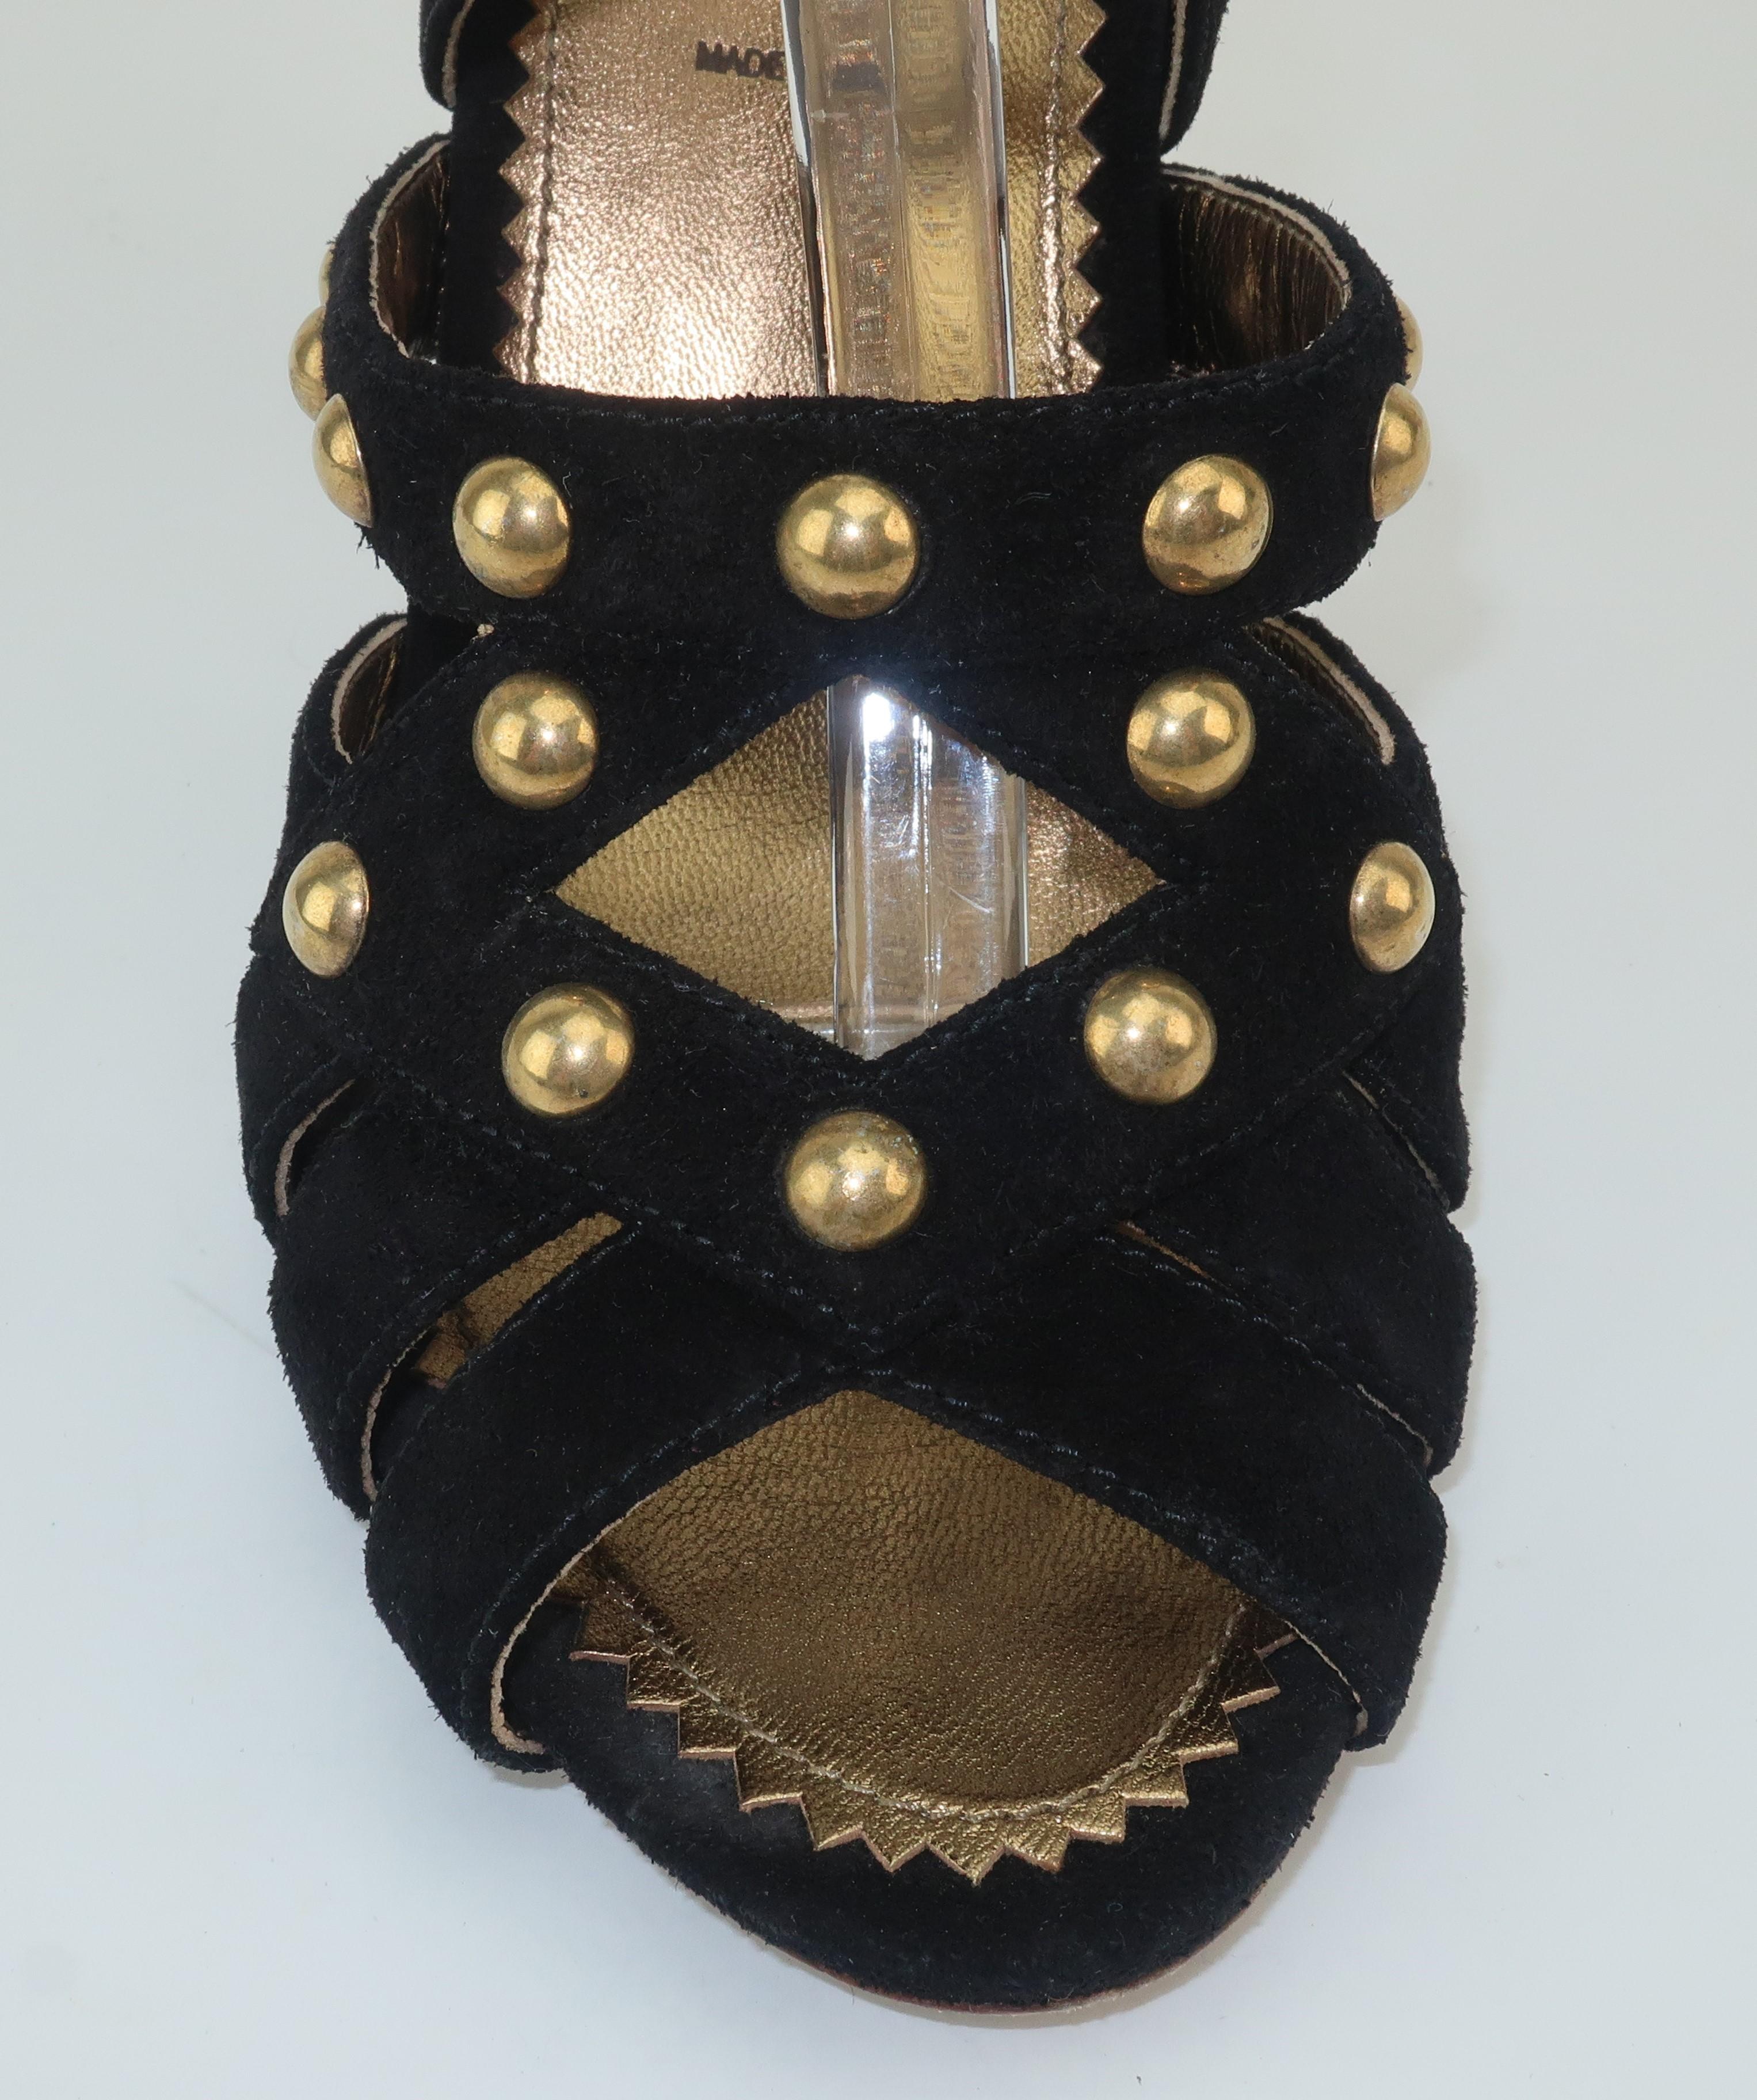 black suede sandals